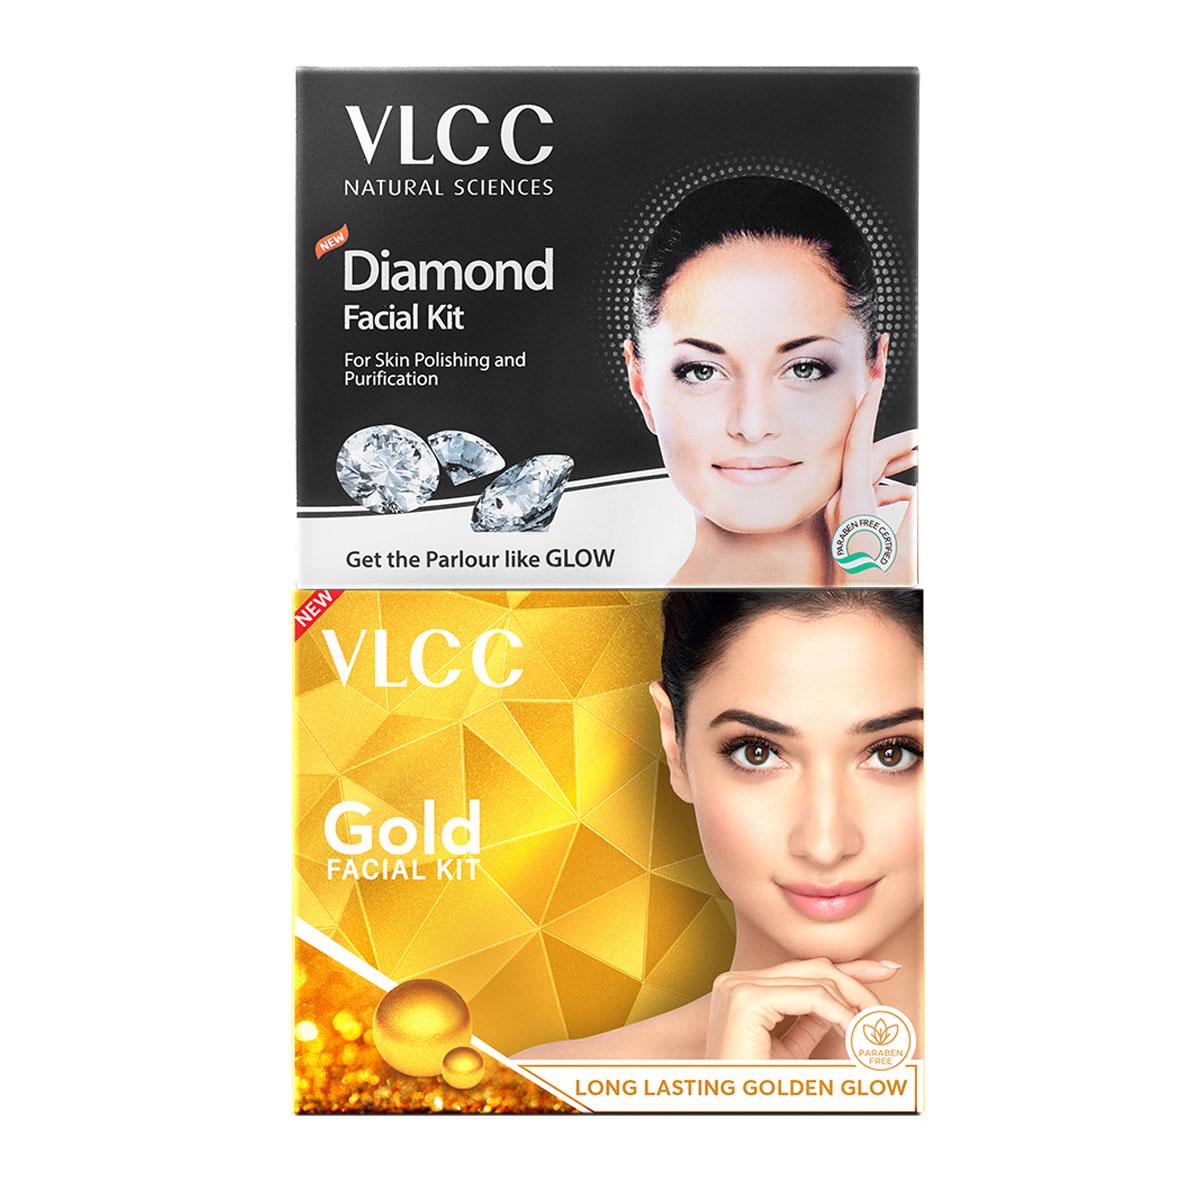 VLCC Gold Facial Kit & Diamond Single Facial Kit - Reveal Glowing Skin